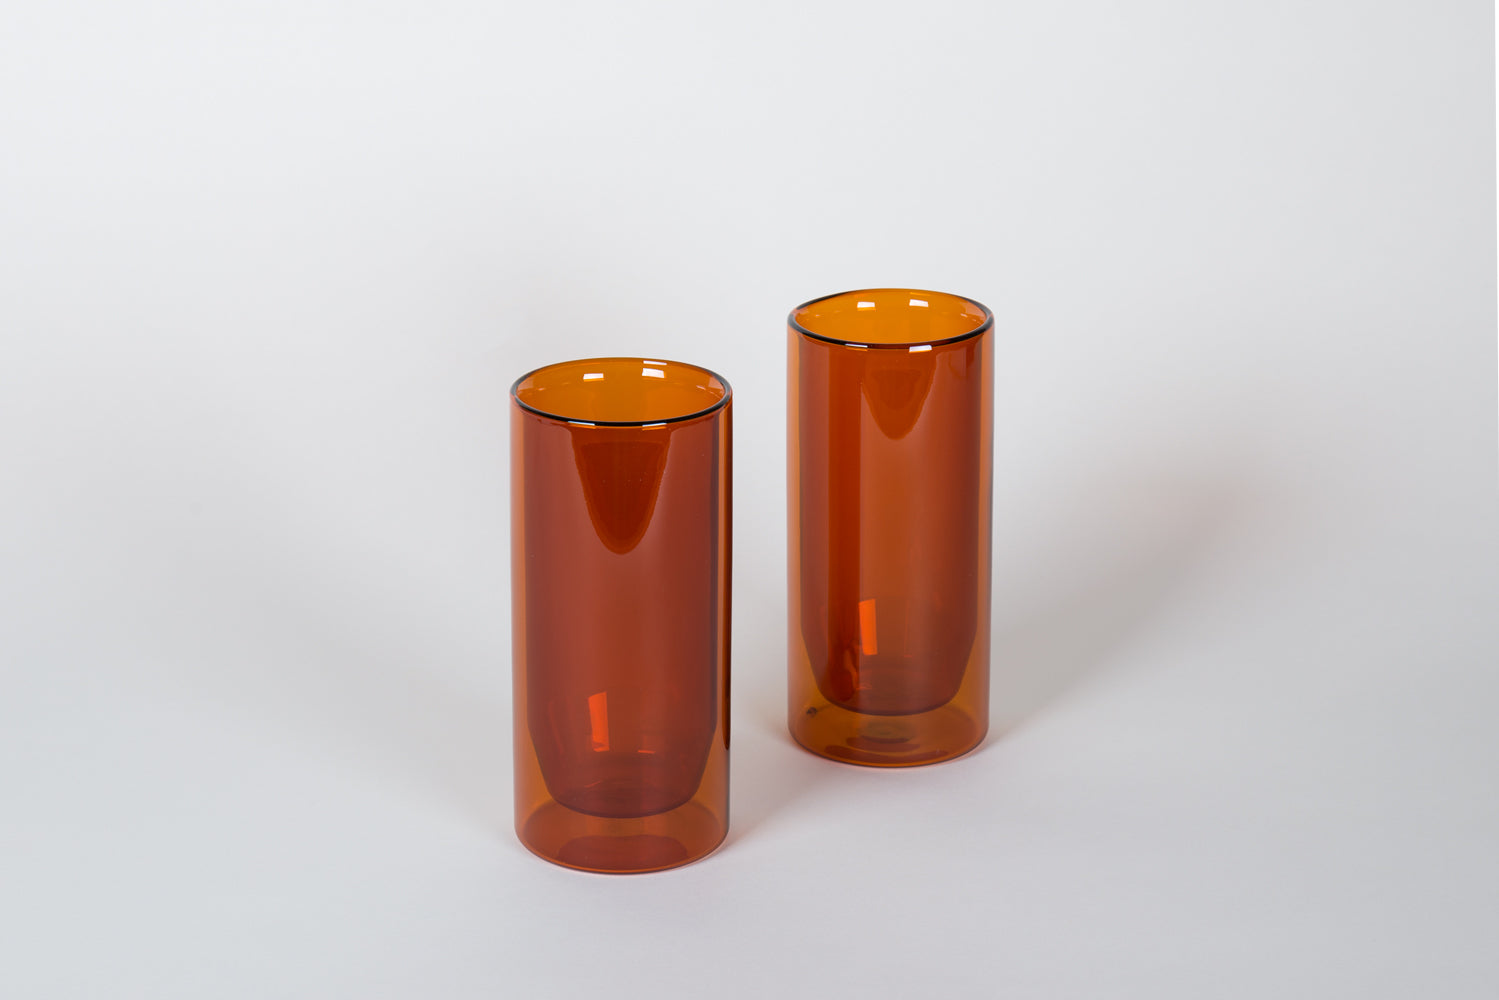 Double Wall Glass - High Borosilicate Glass - Insulated - Amber